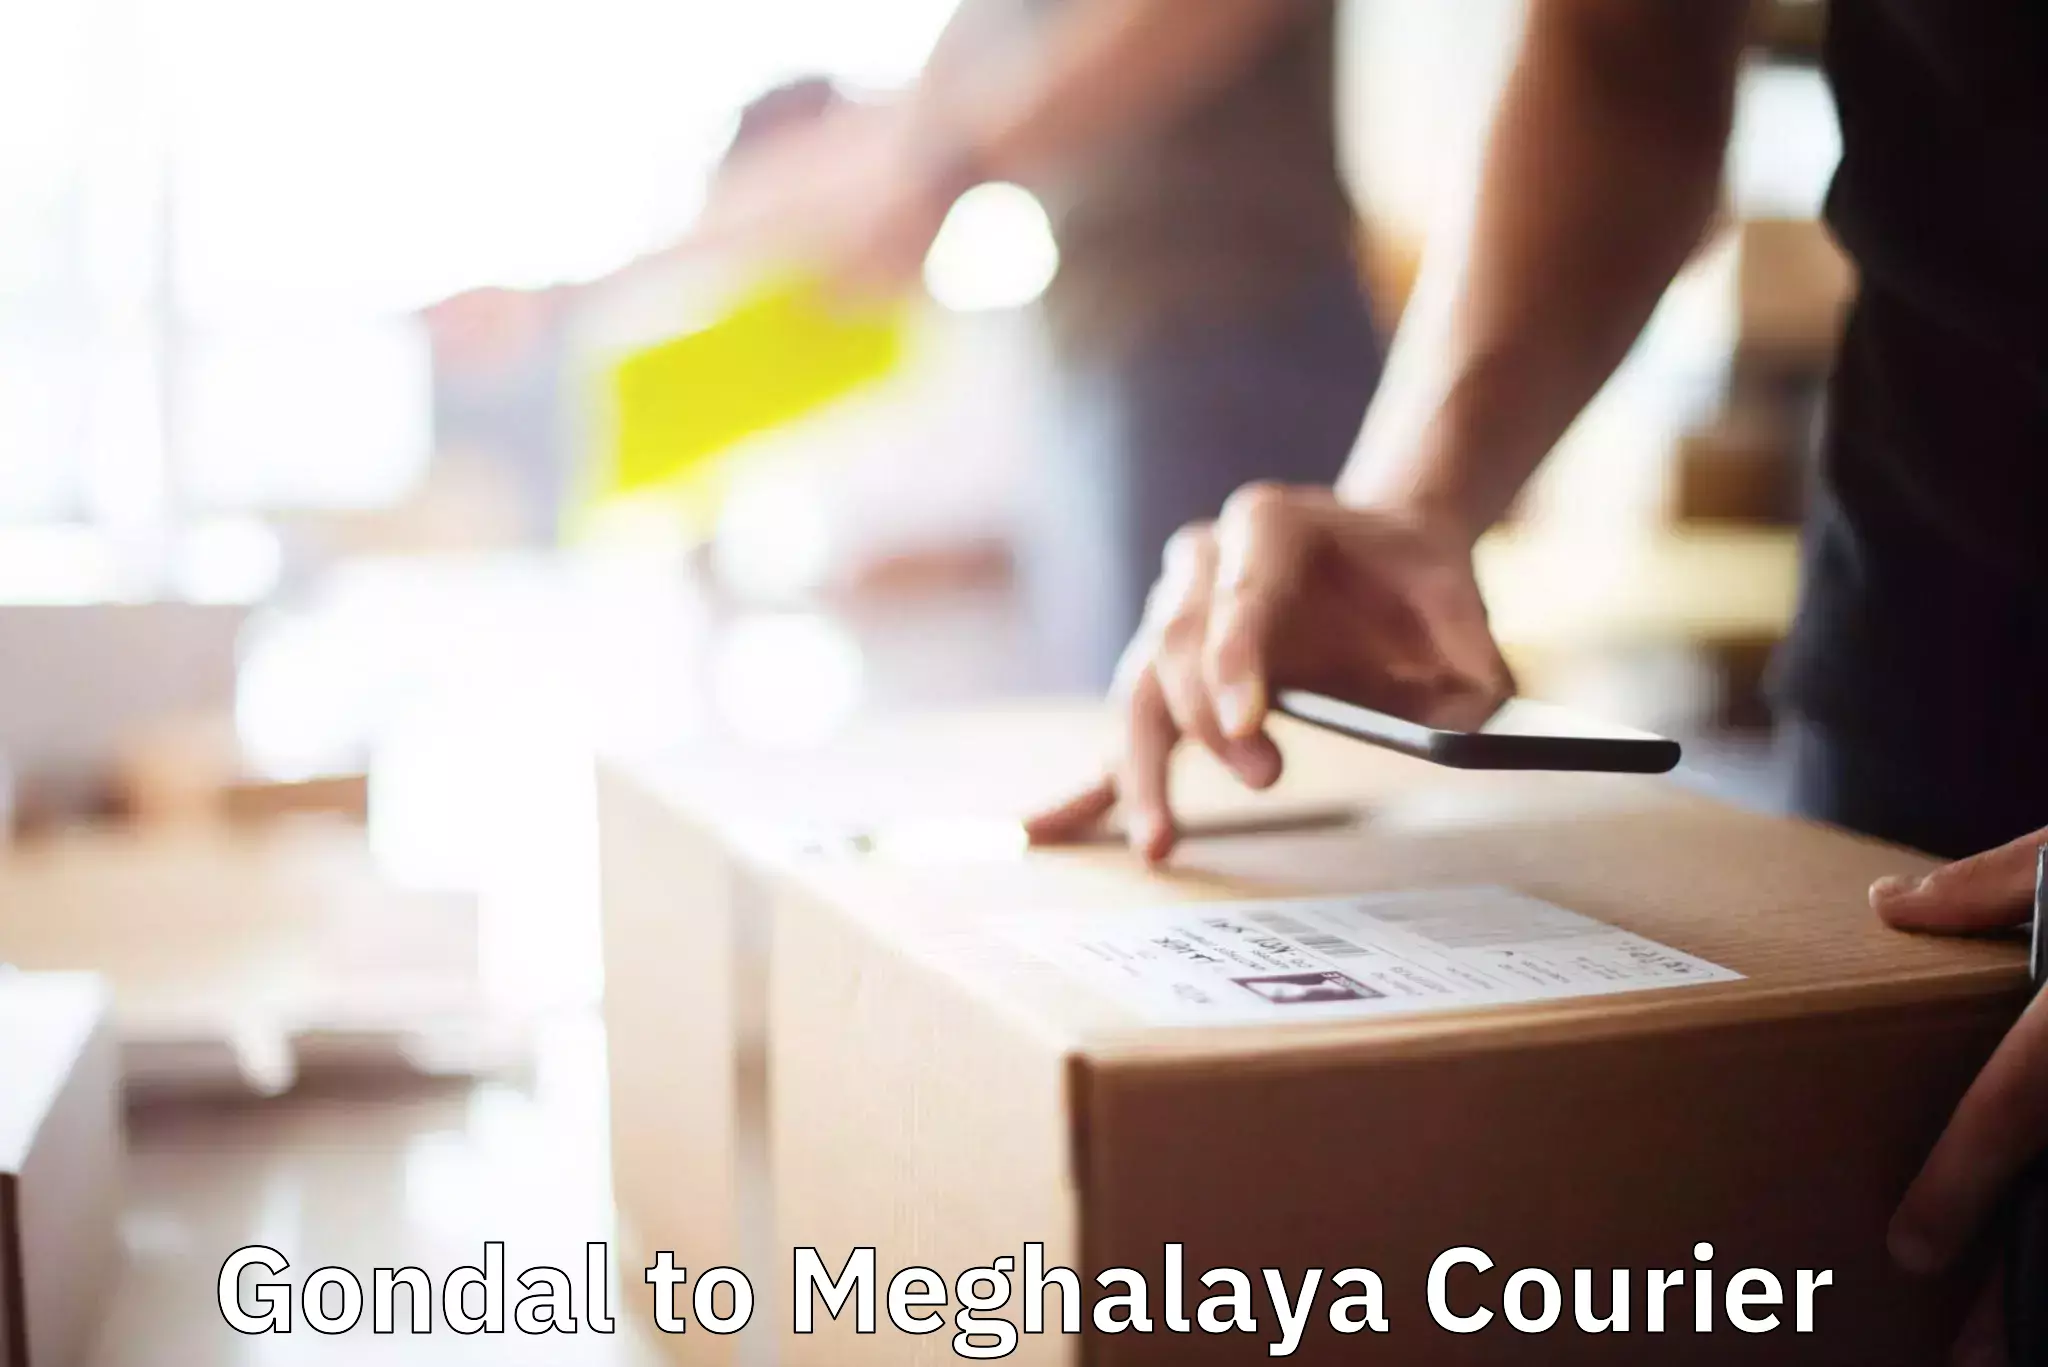 Specialized moving company Gondal to Meghalaya